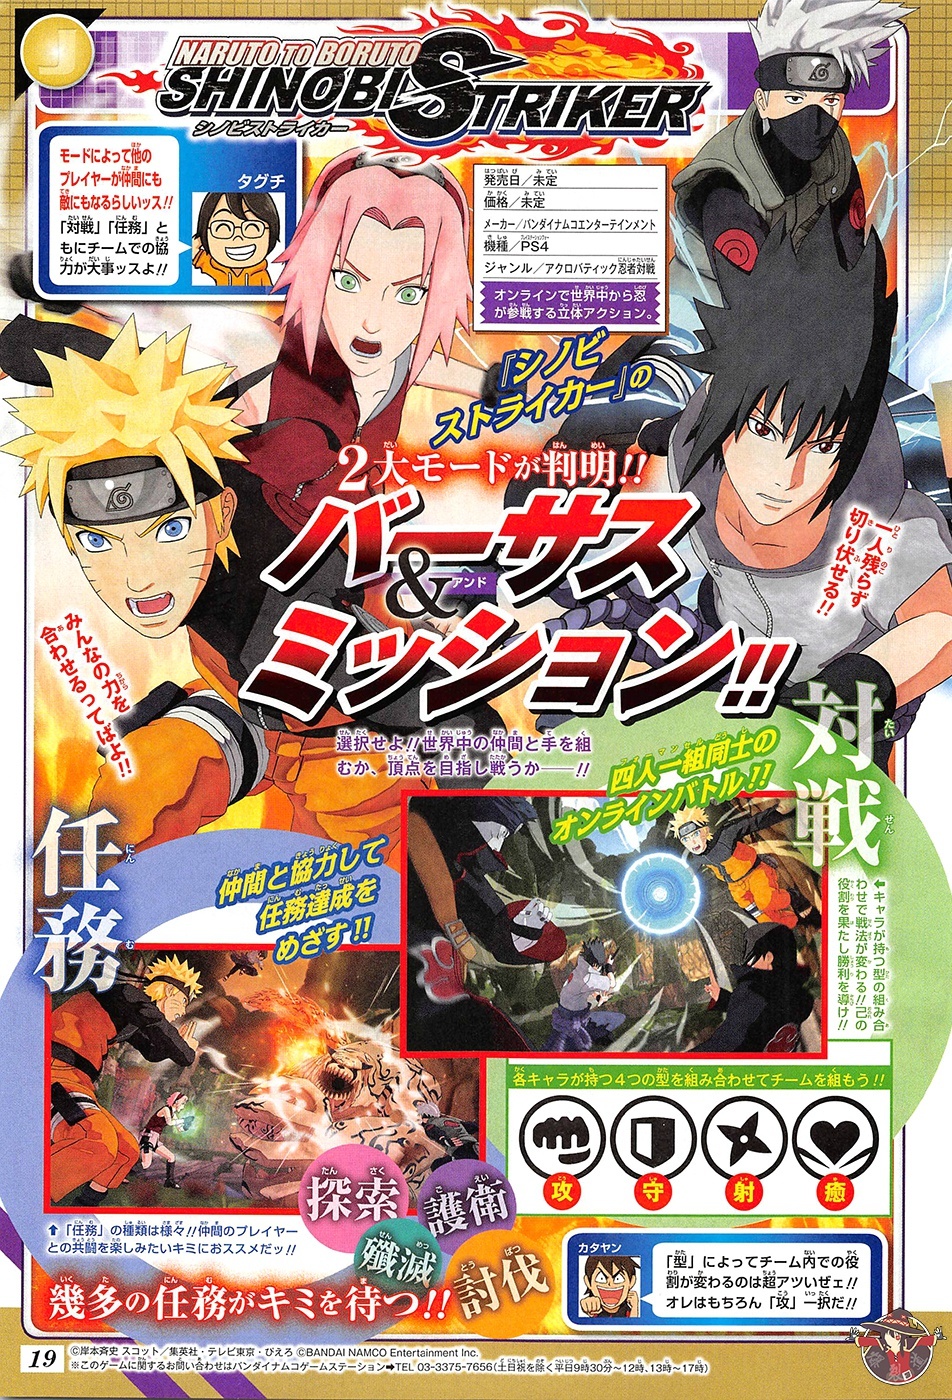 Naruto To Boruto Shinobi Striker Has Versus And Mission